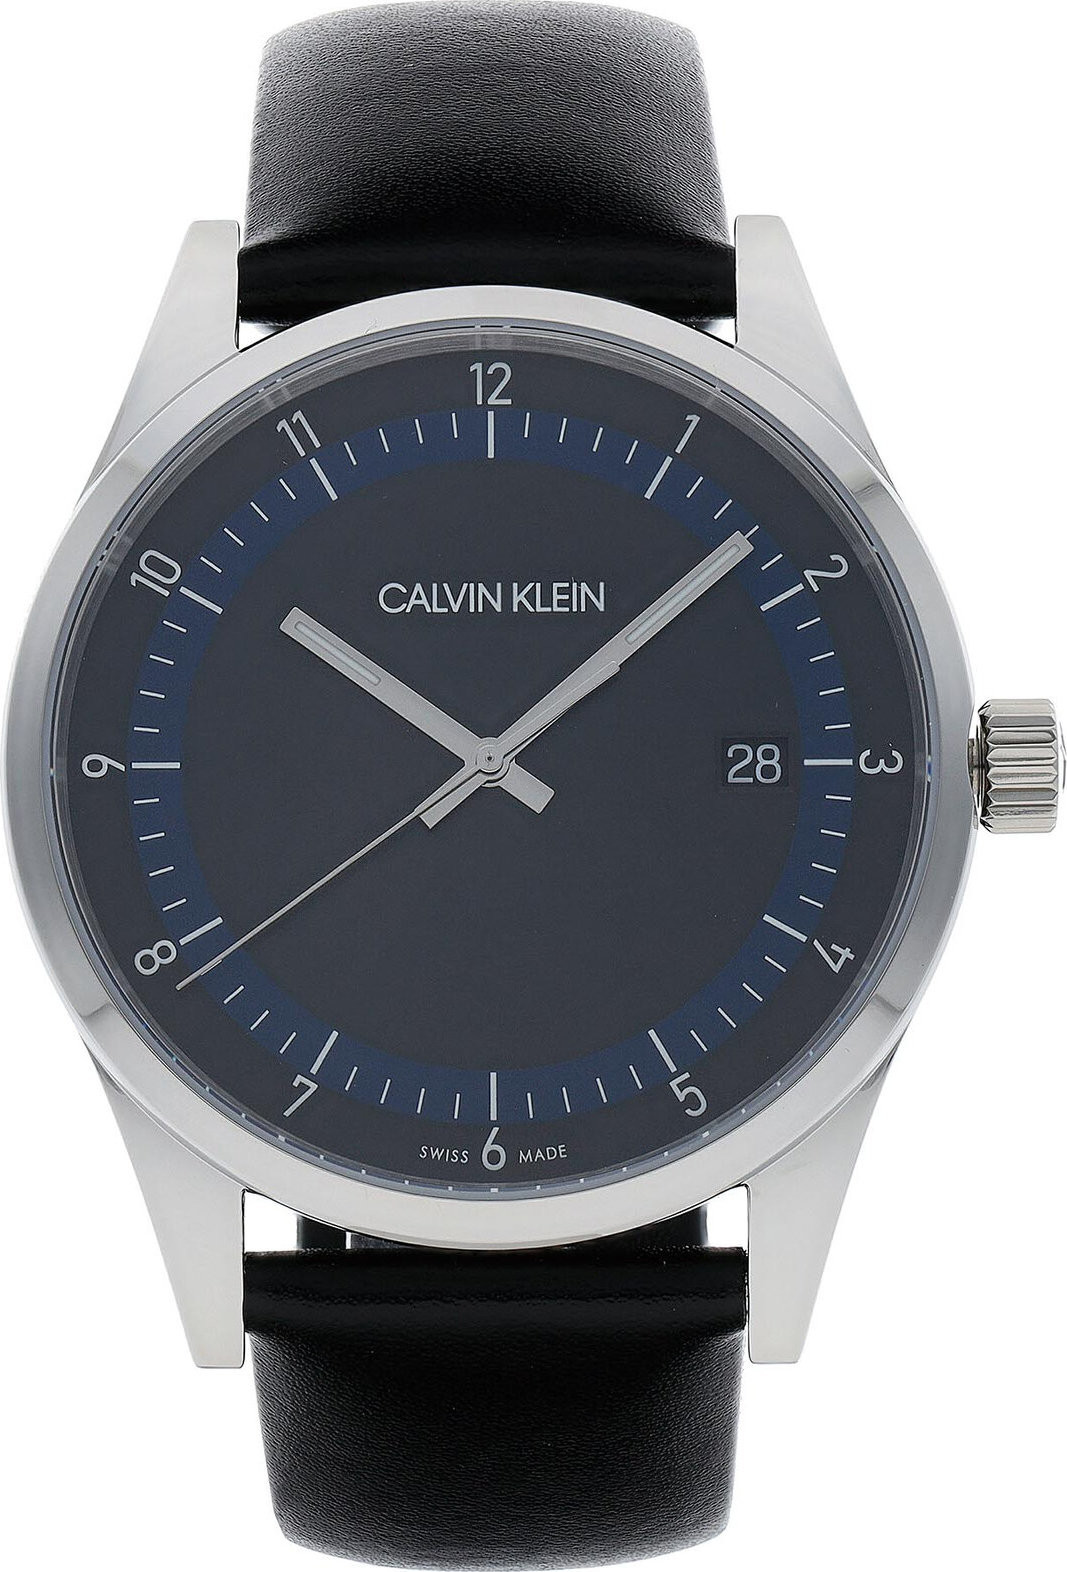 Hodinky Calvin Klein Completion KAM211C1 Black/Silver